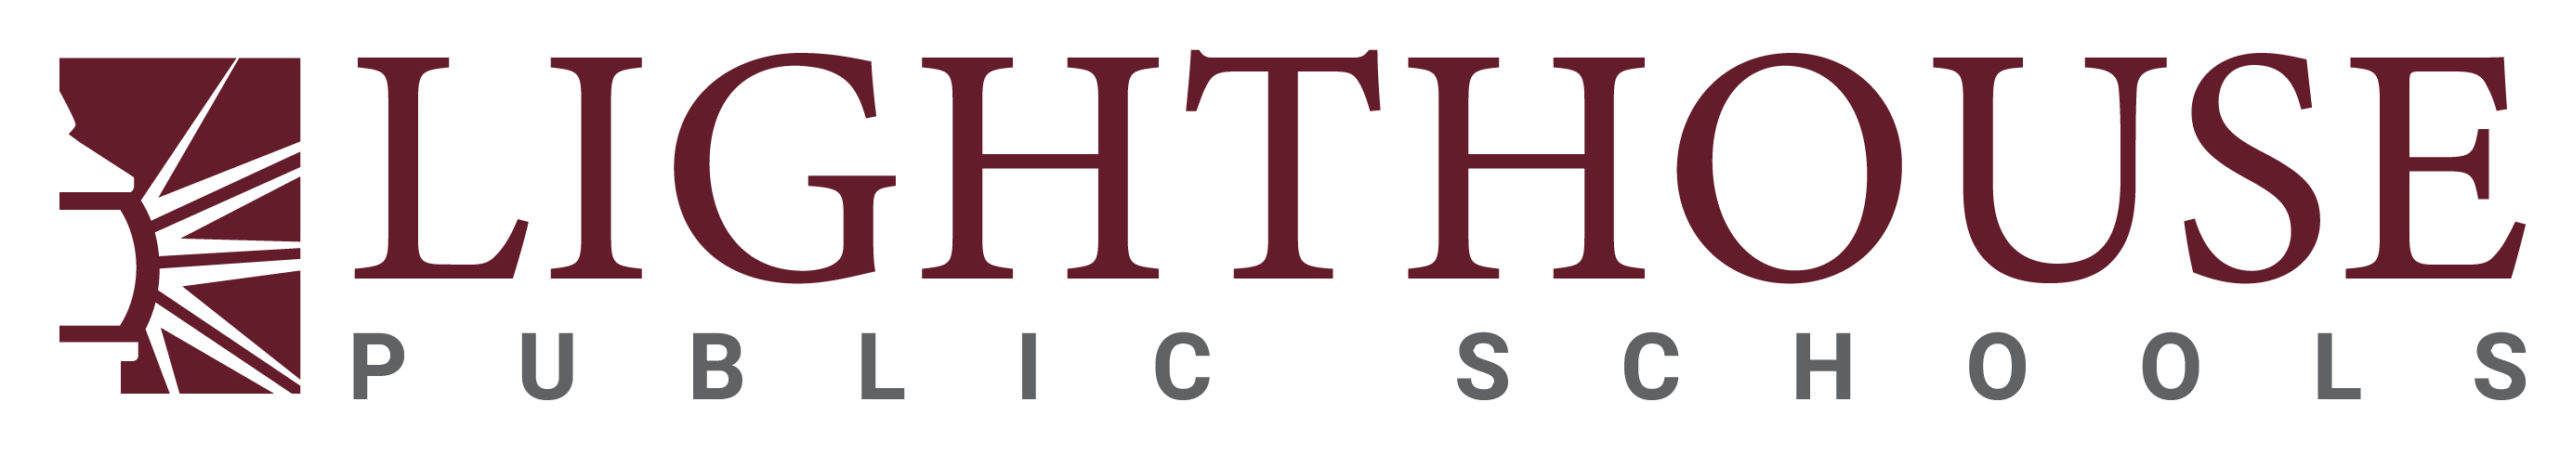 Lighthouse Public Schools logo | Charter School in San Antonio